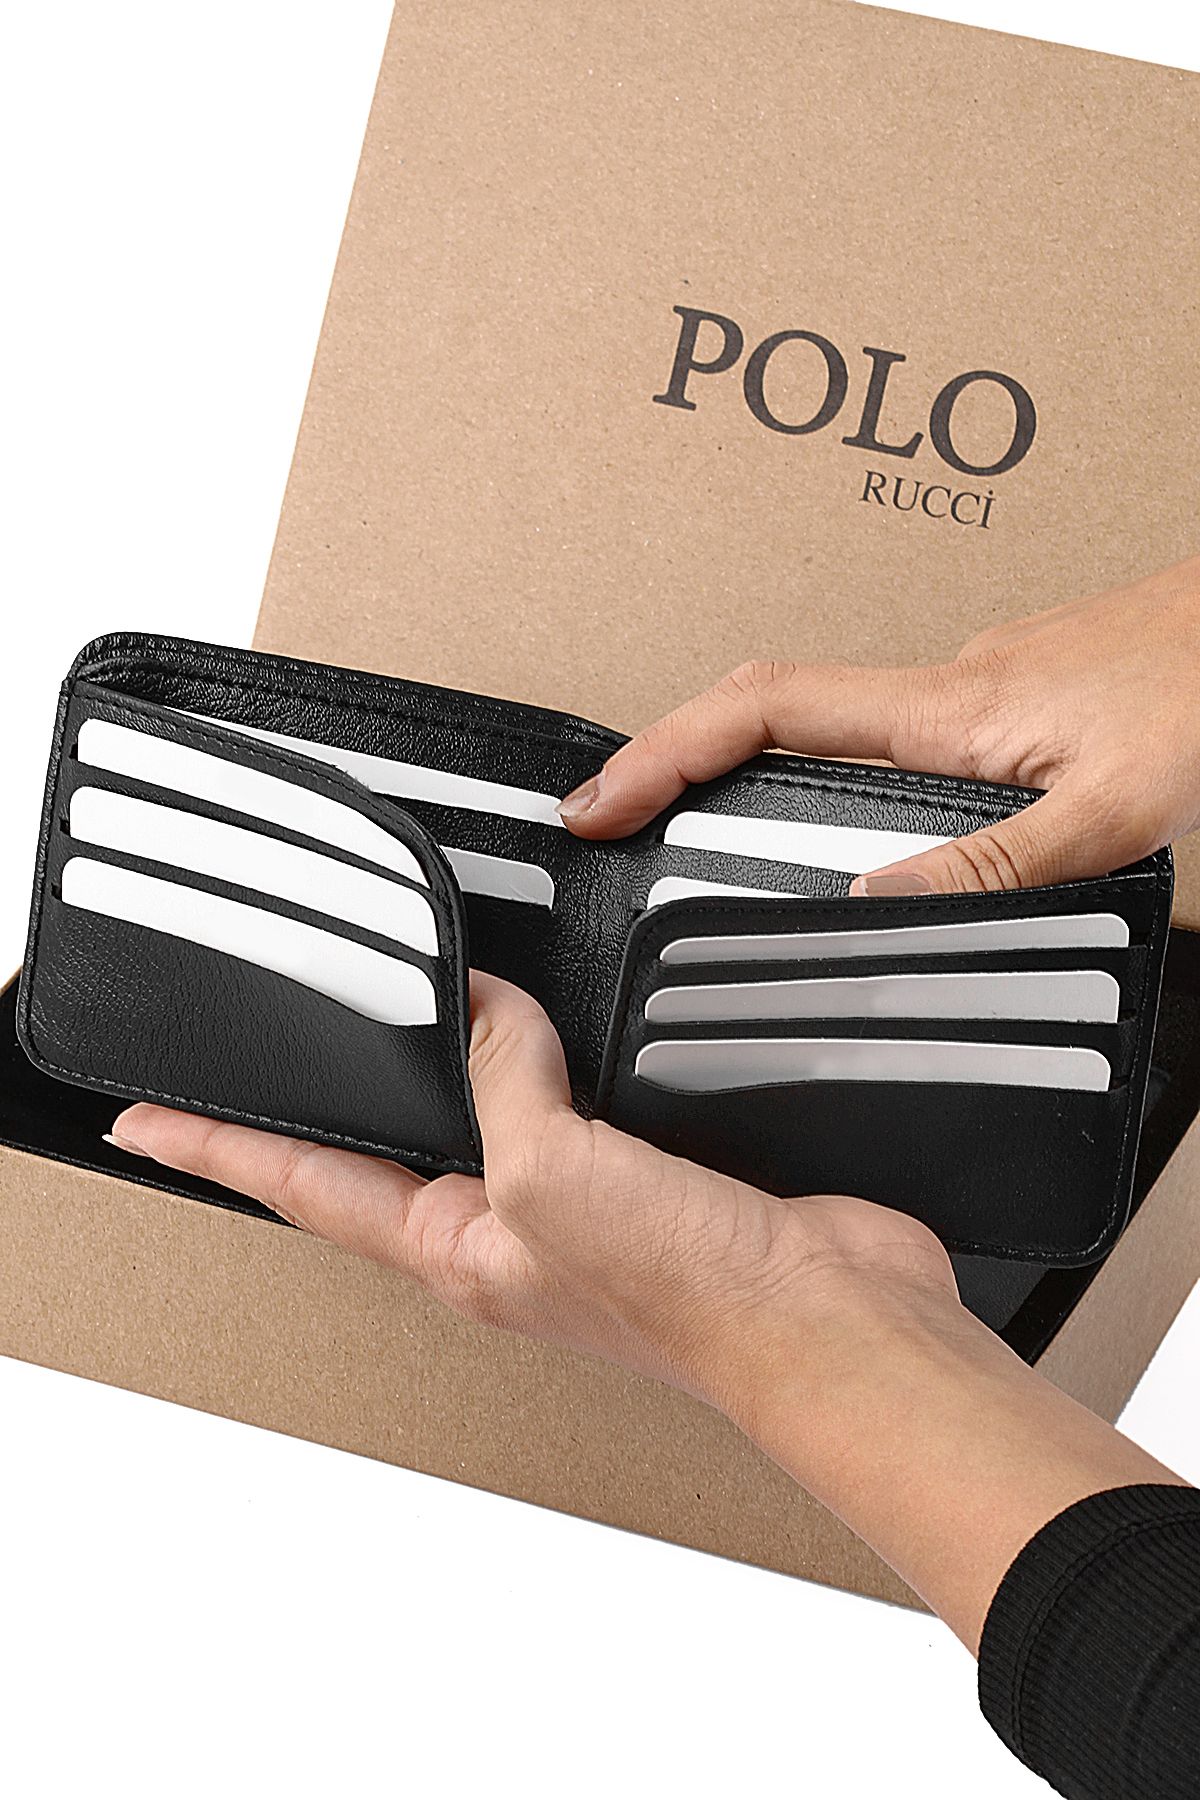 Polo Rucci Erkek Set Kombin Kol Saati Kemer Cüzdan Siyah Renk PL-0804E3